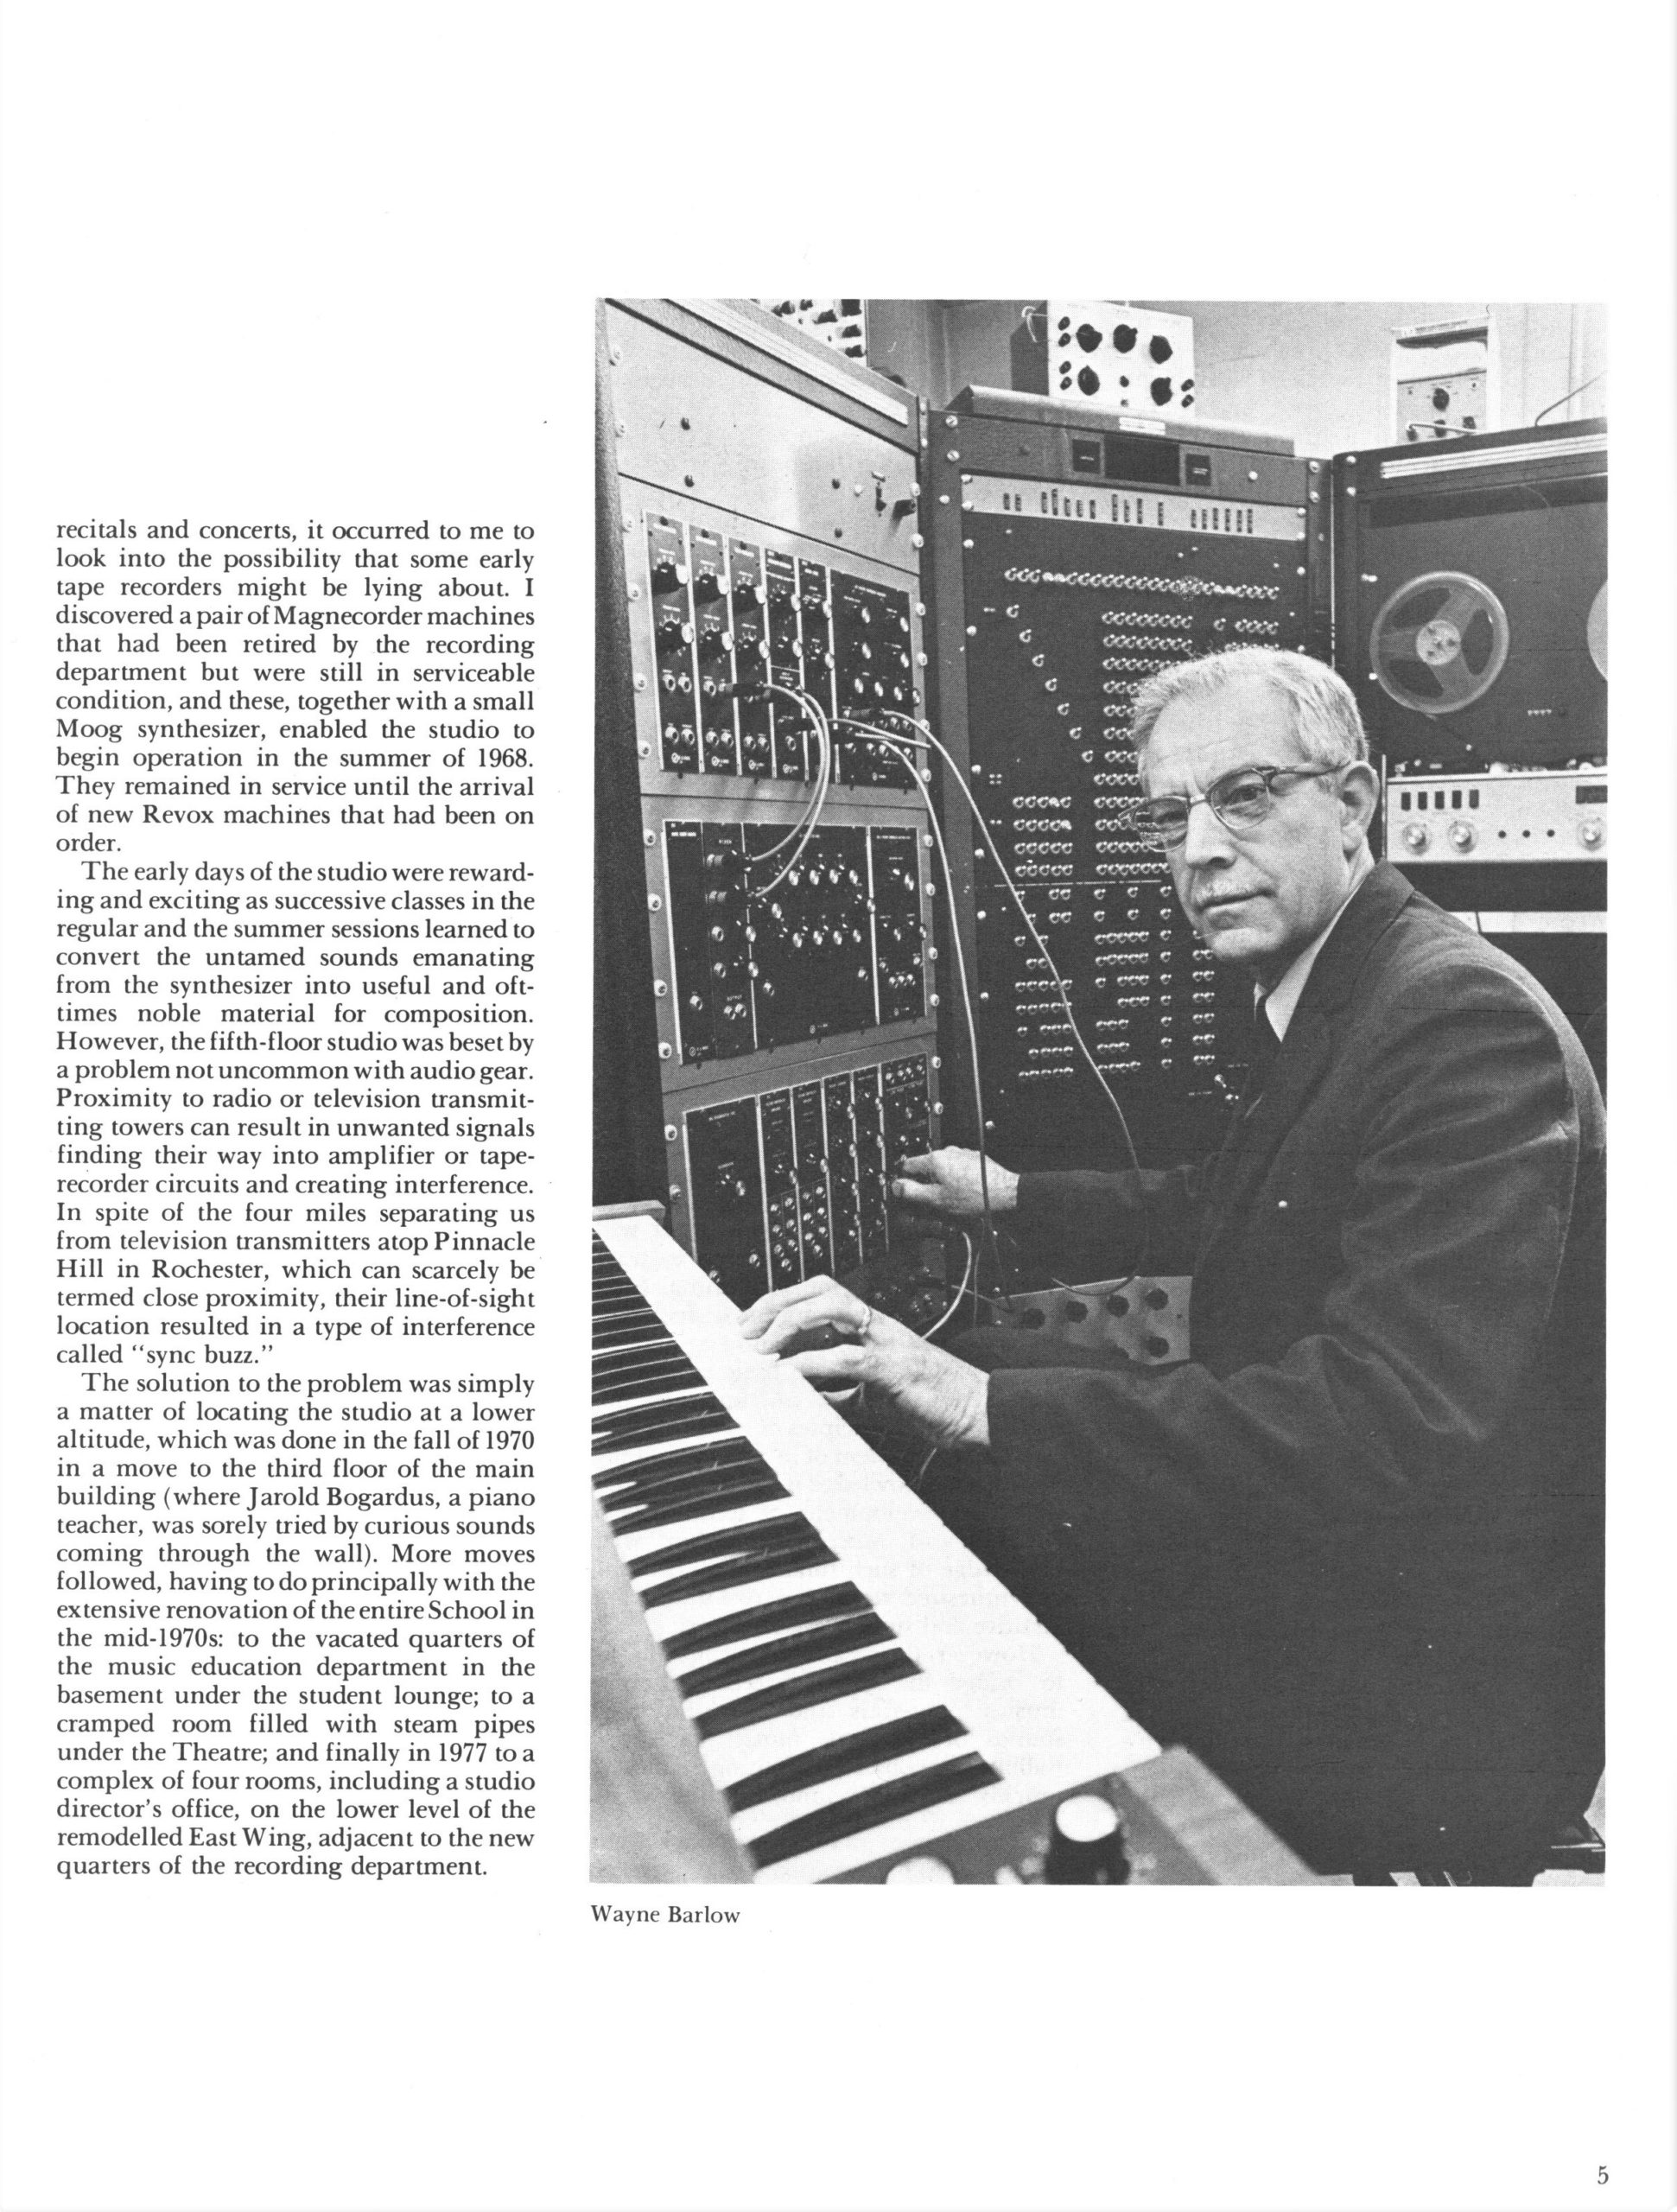 Wayne Barlow, Electronic Music at Eastman article, page 2